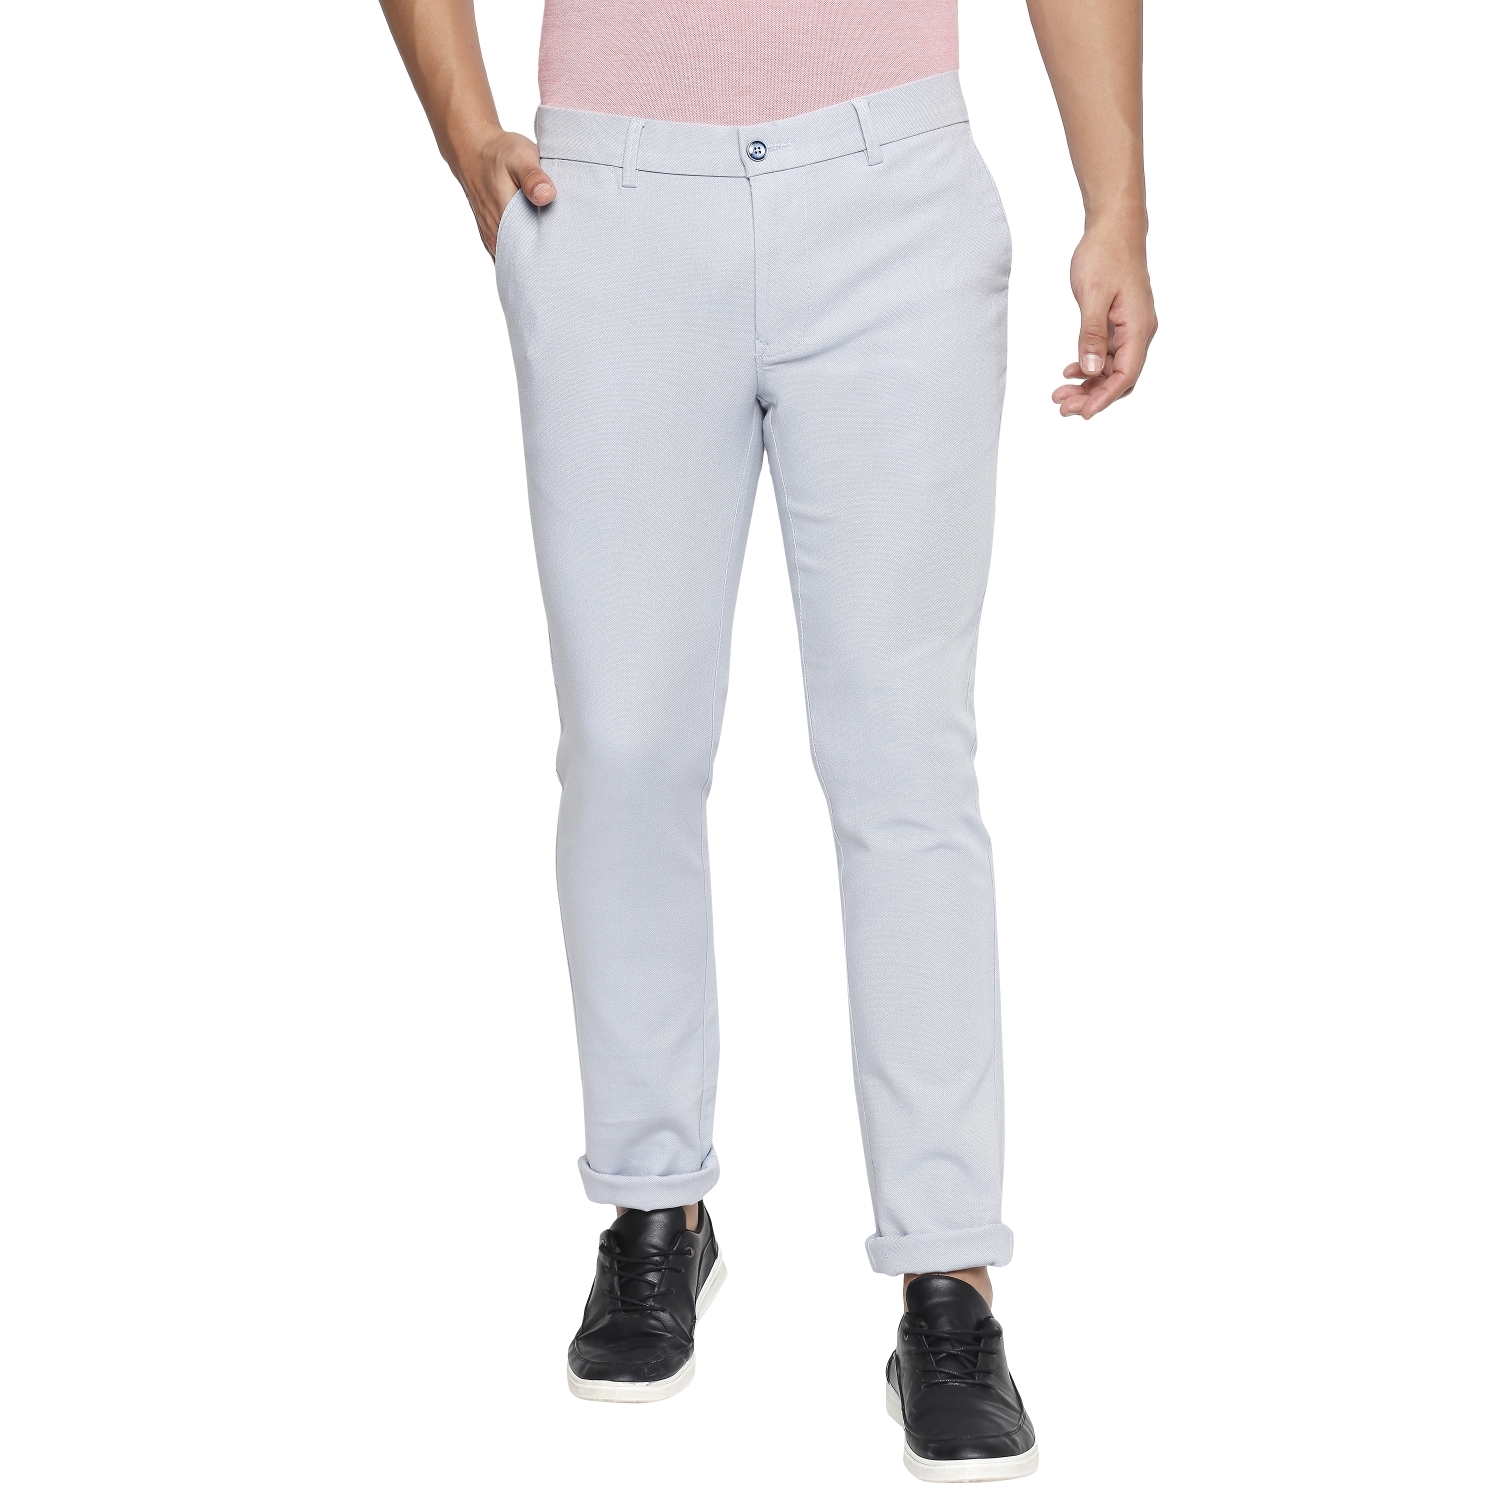 Basics | Men's Light Blue Cotton Blend Solid Trouser 0